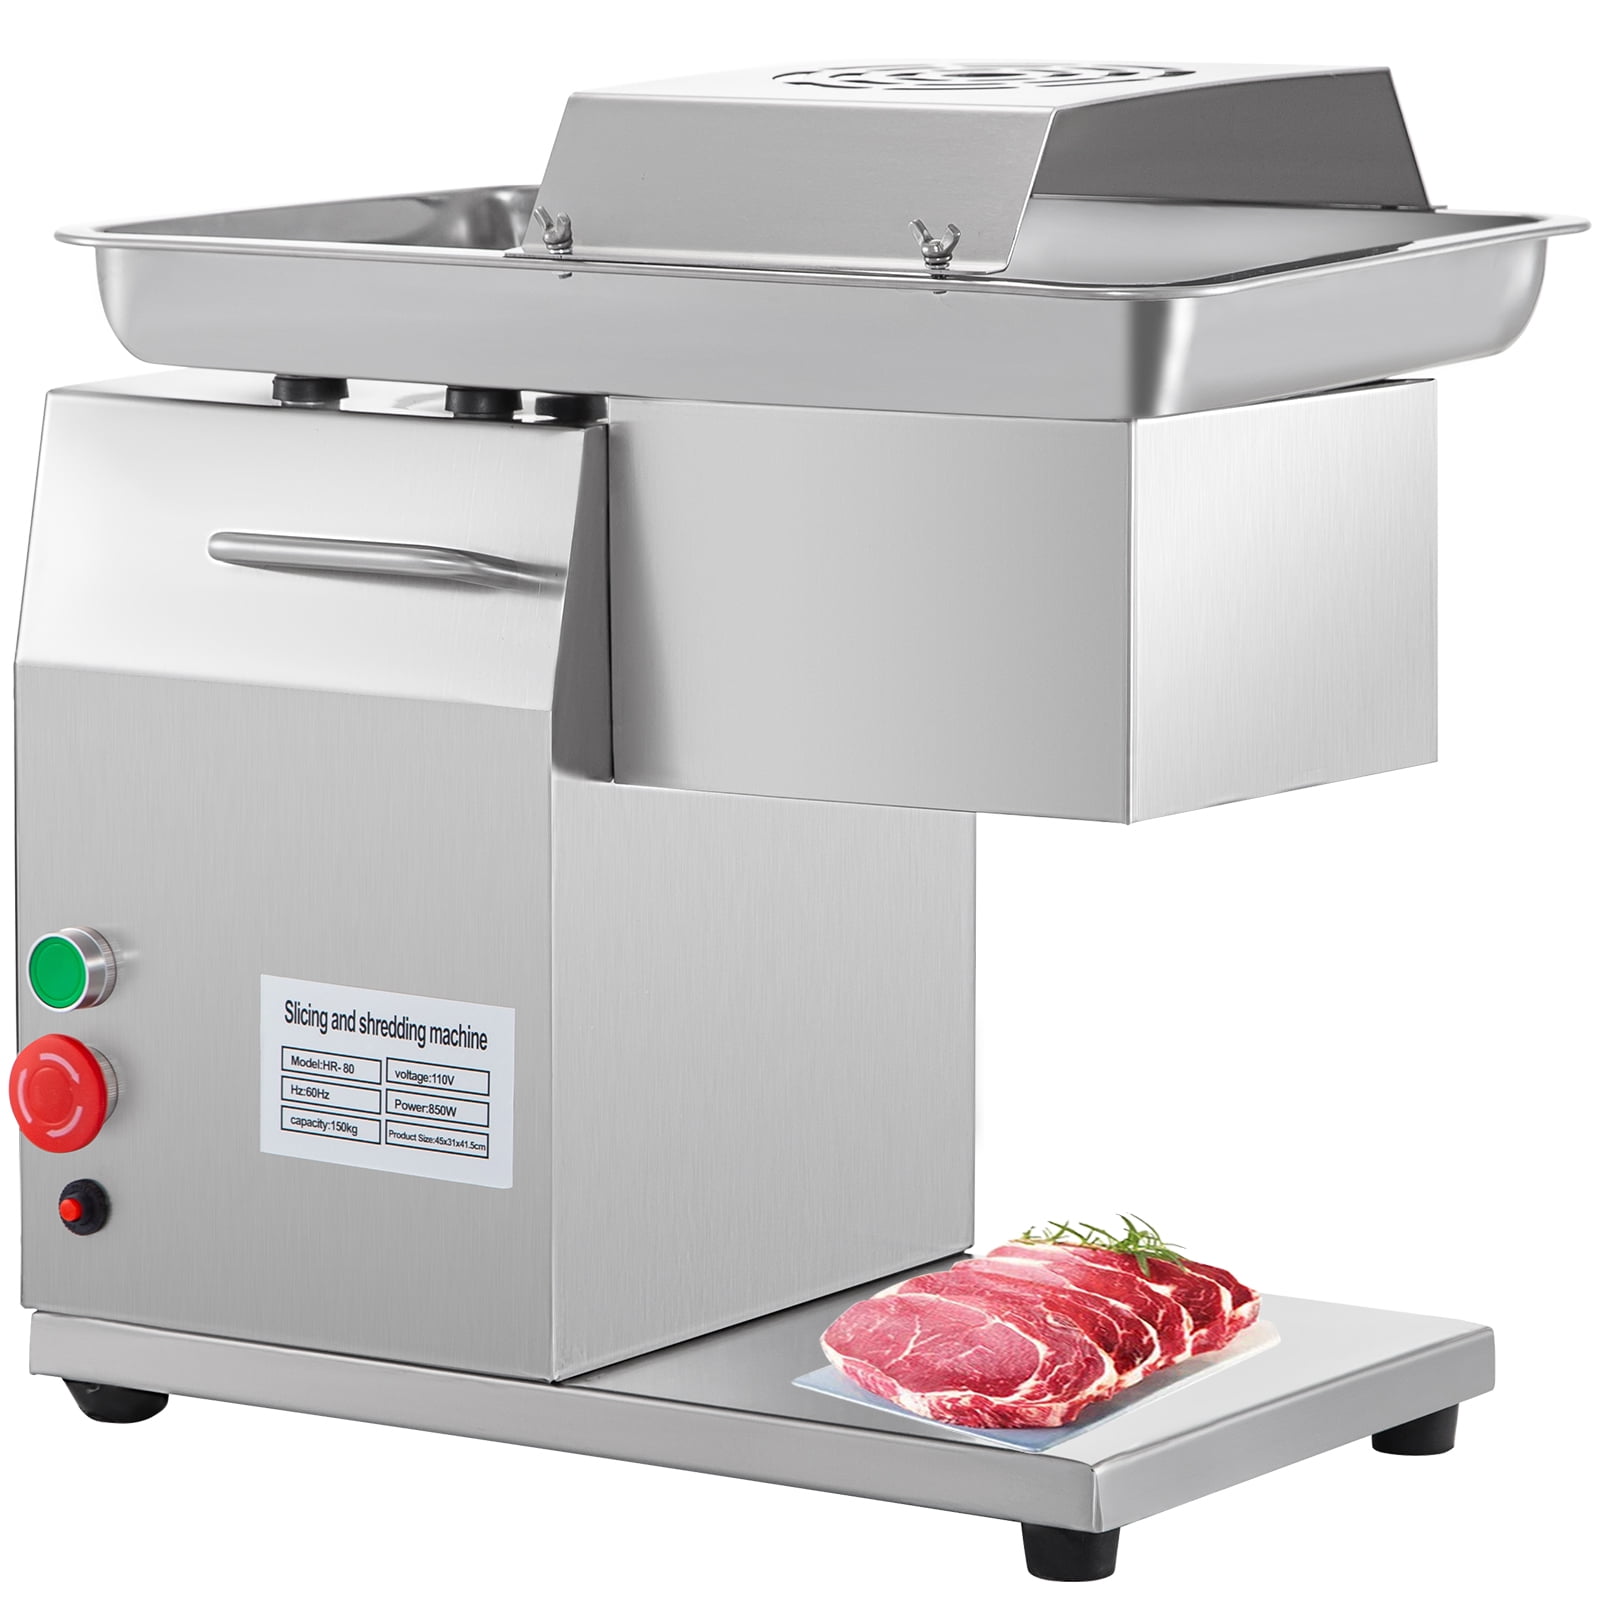 Desktop Electric Meat Slicing Shredding Cutting Machine and Meat Cutter Slicer